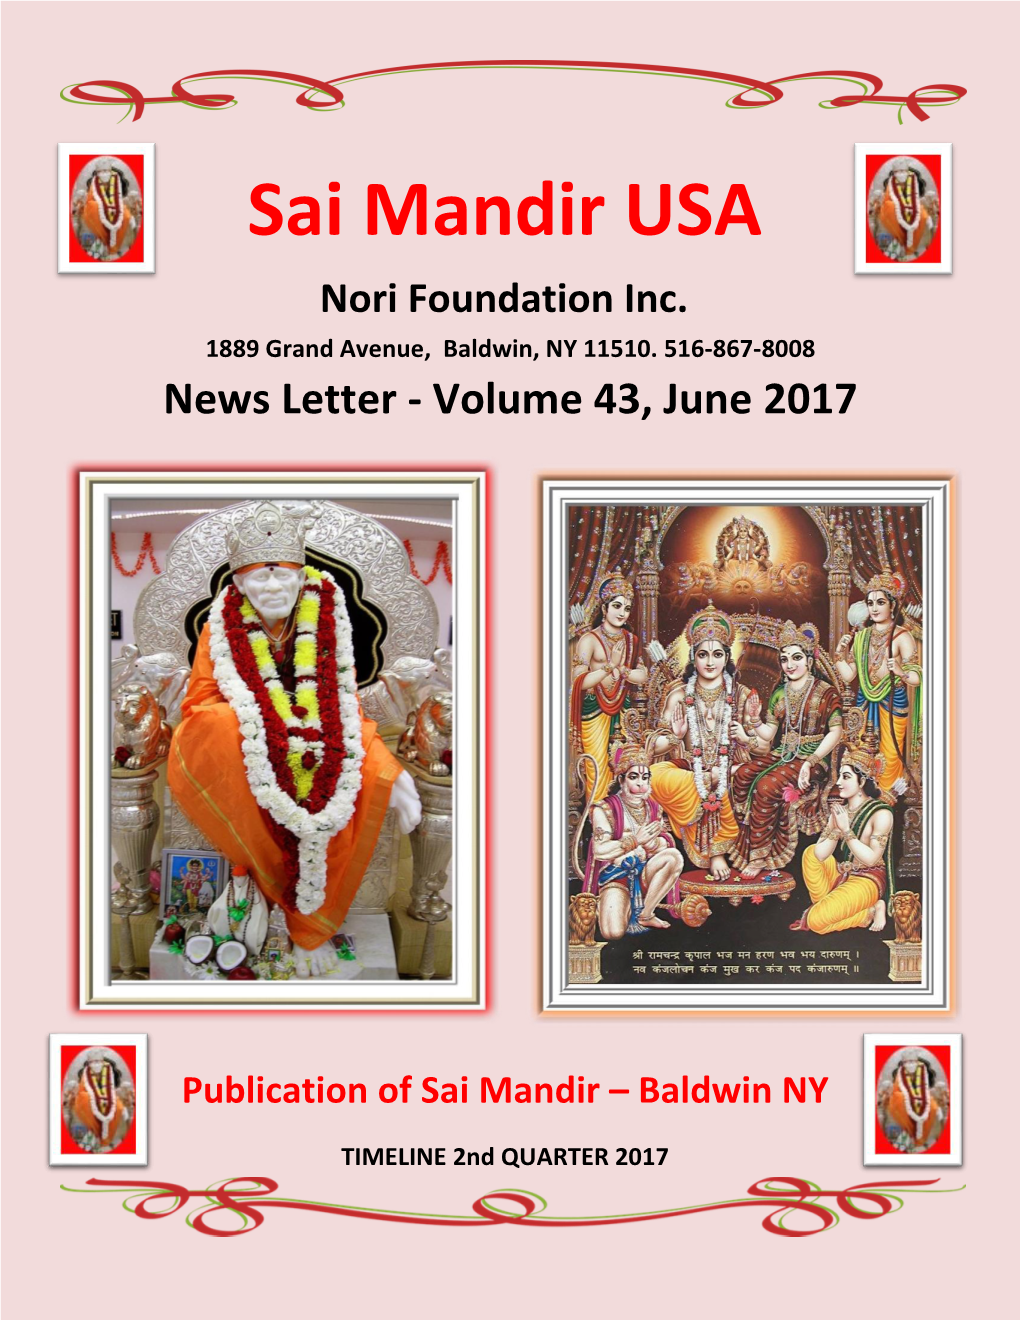 Sai Mandir USA Nori Foundation Inc